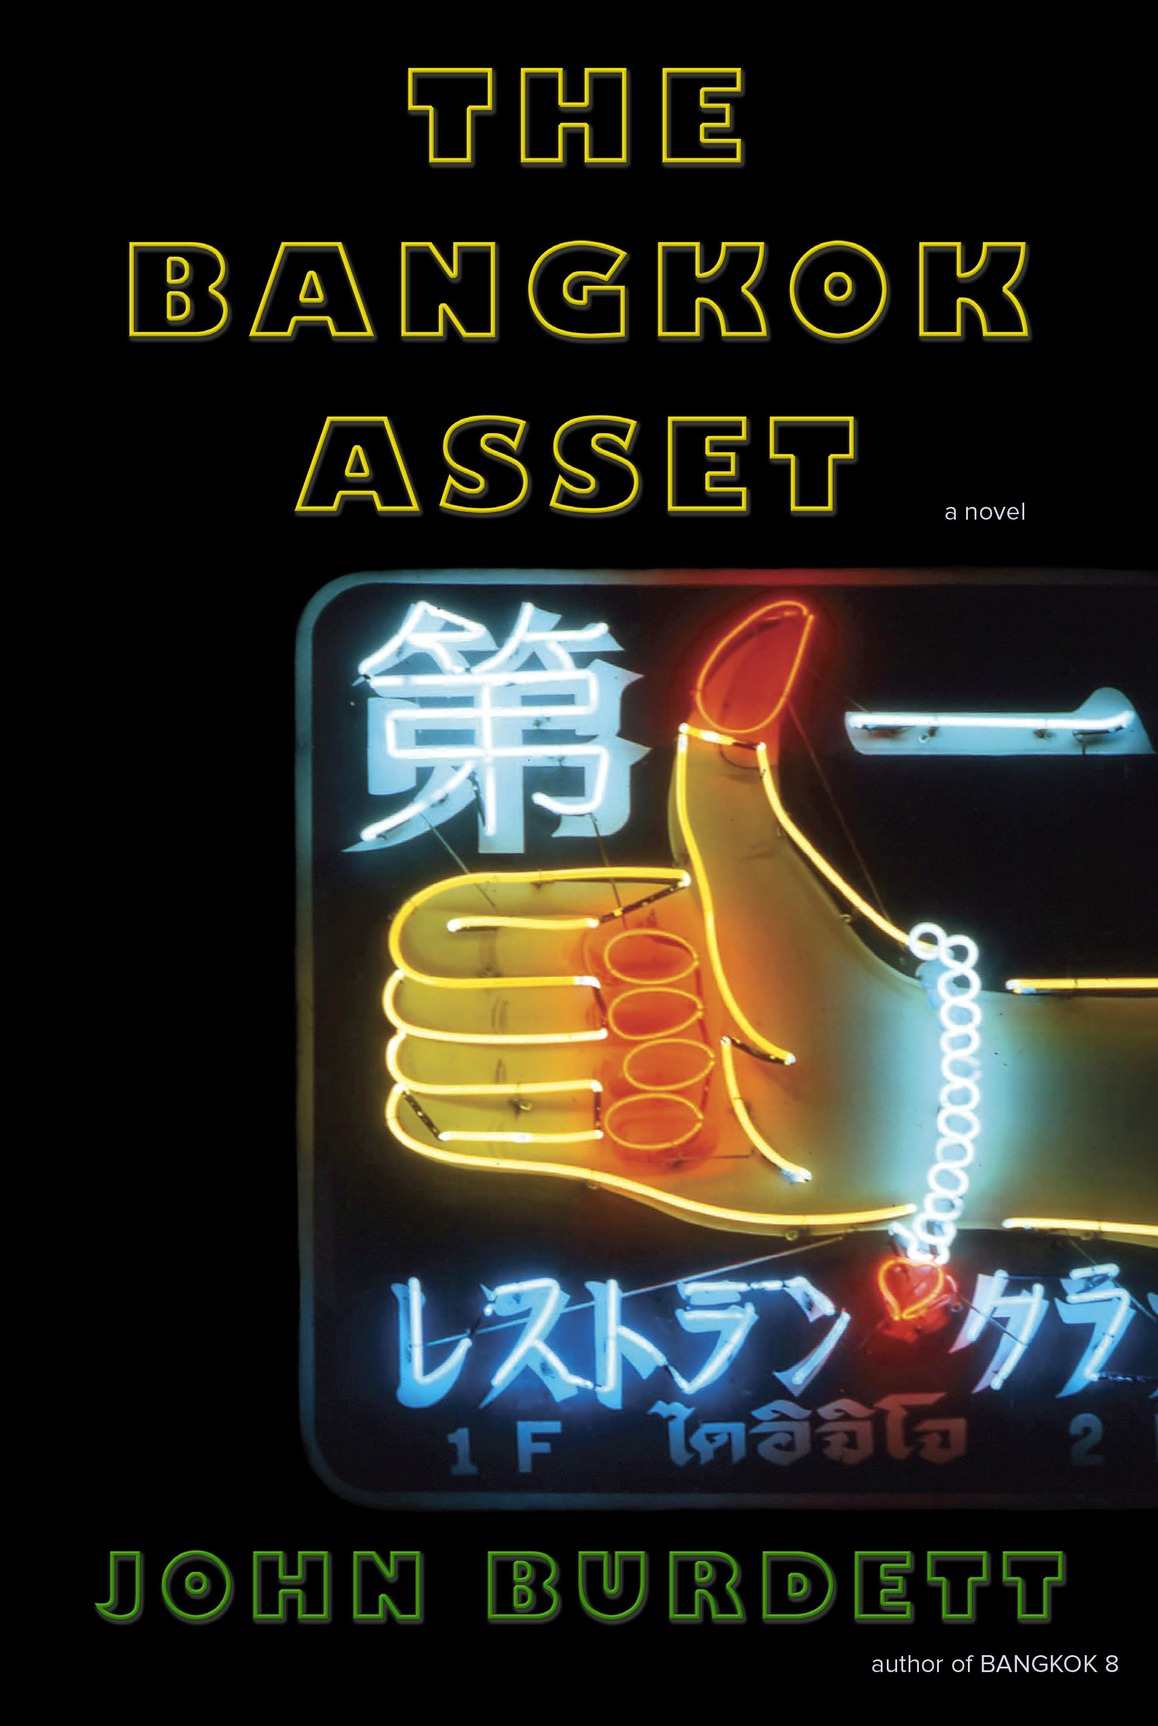 The Bangkok Asset: A novel by John Burdett